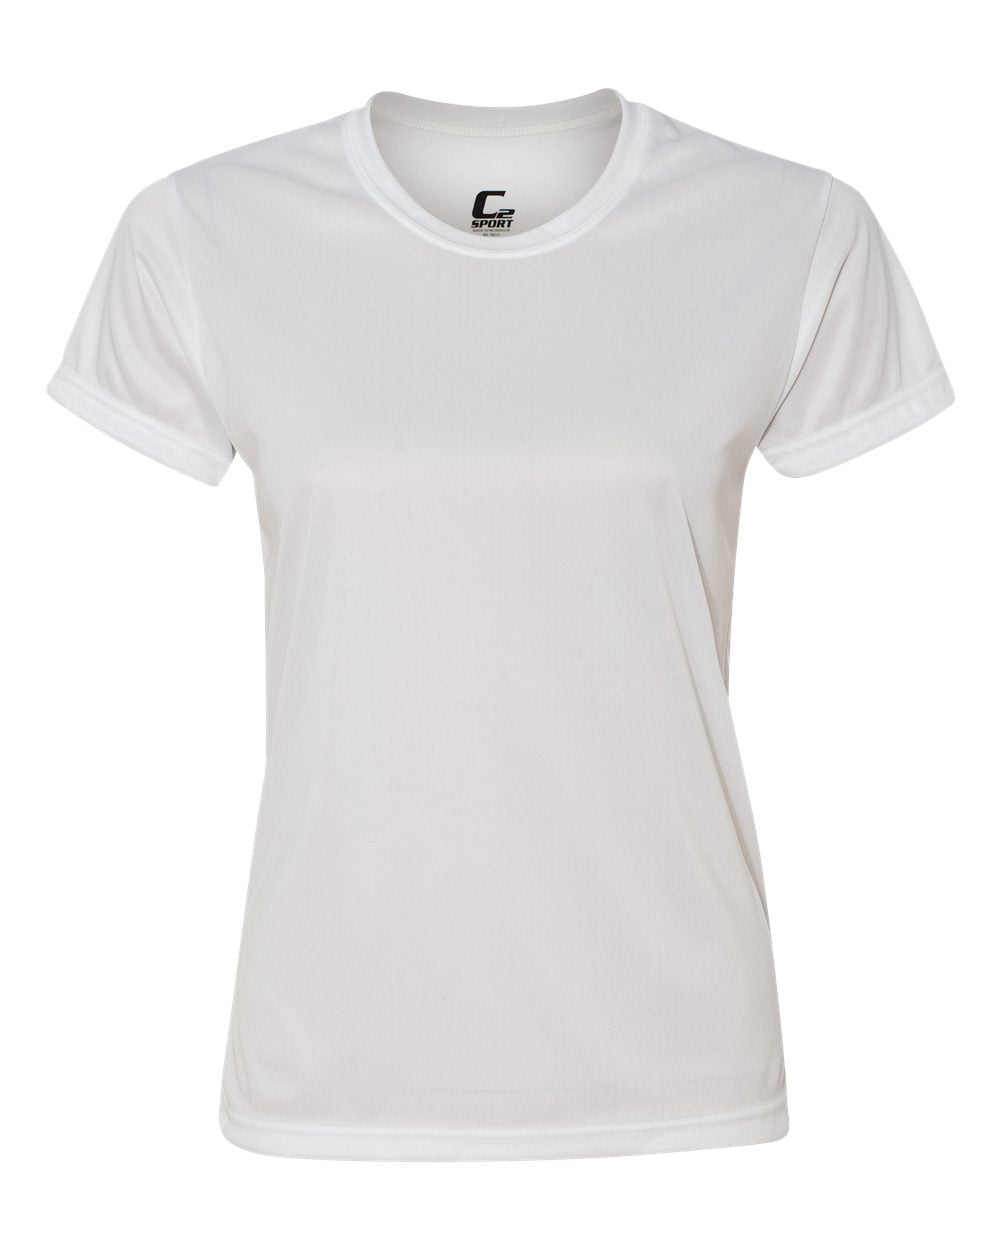 C2 Sport - C2 Sport Women’s Performance T-Shirt in White 2XL | 5600 ...